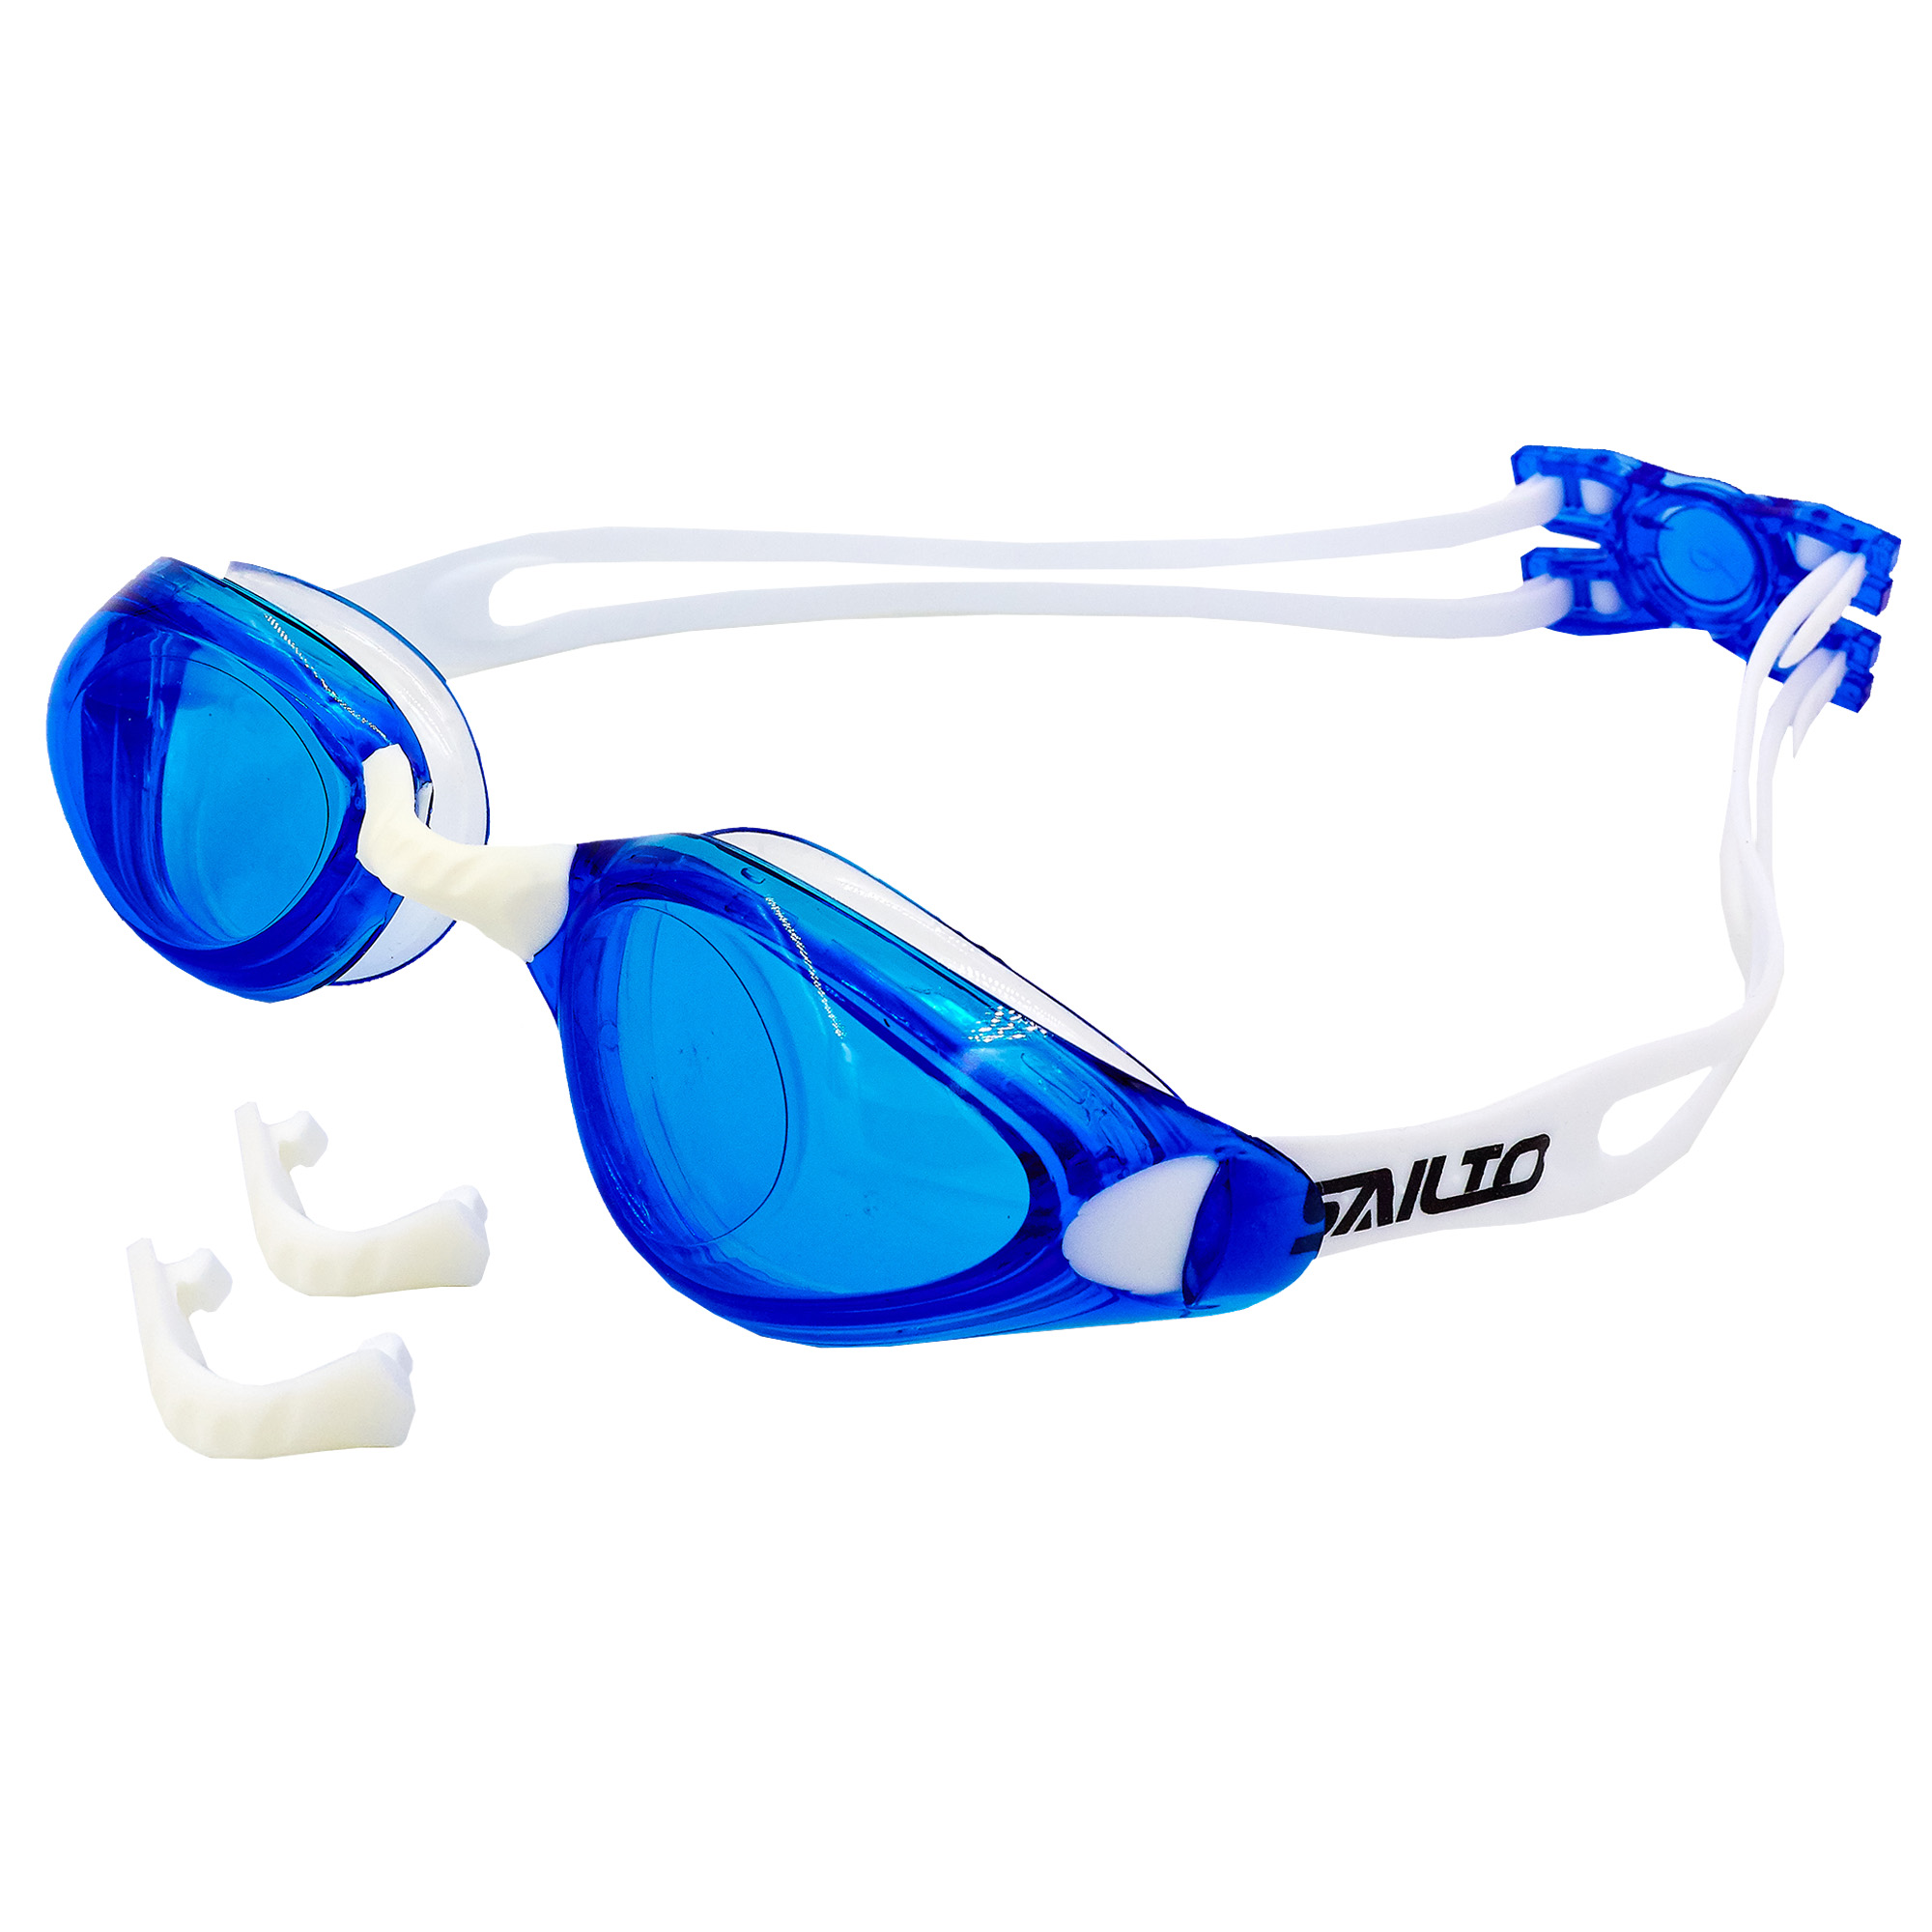 Очки для плавания SAILTO KH45-B Сине-белый